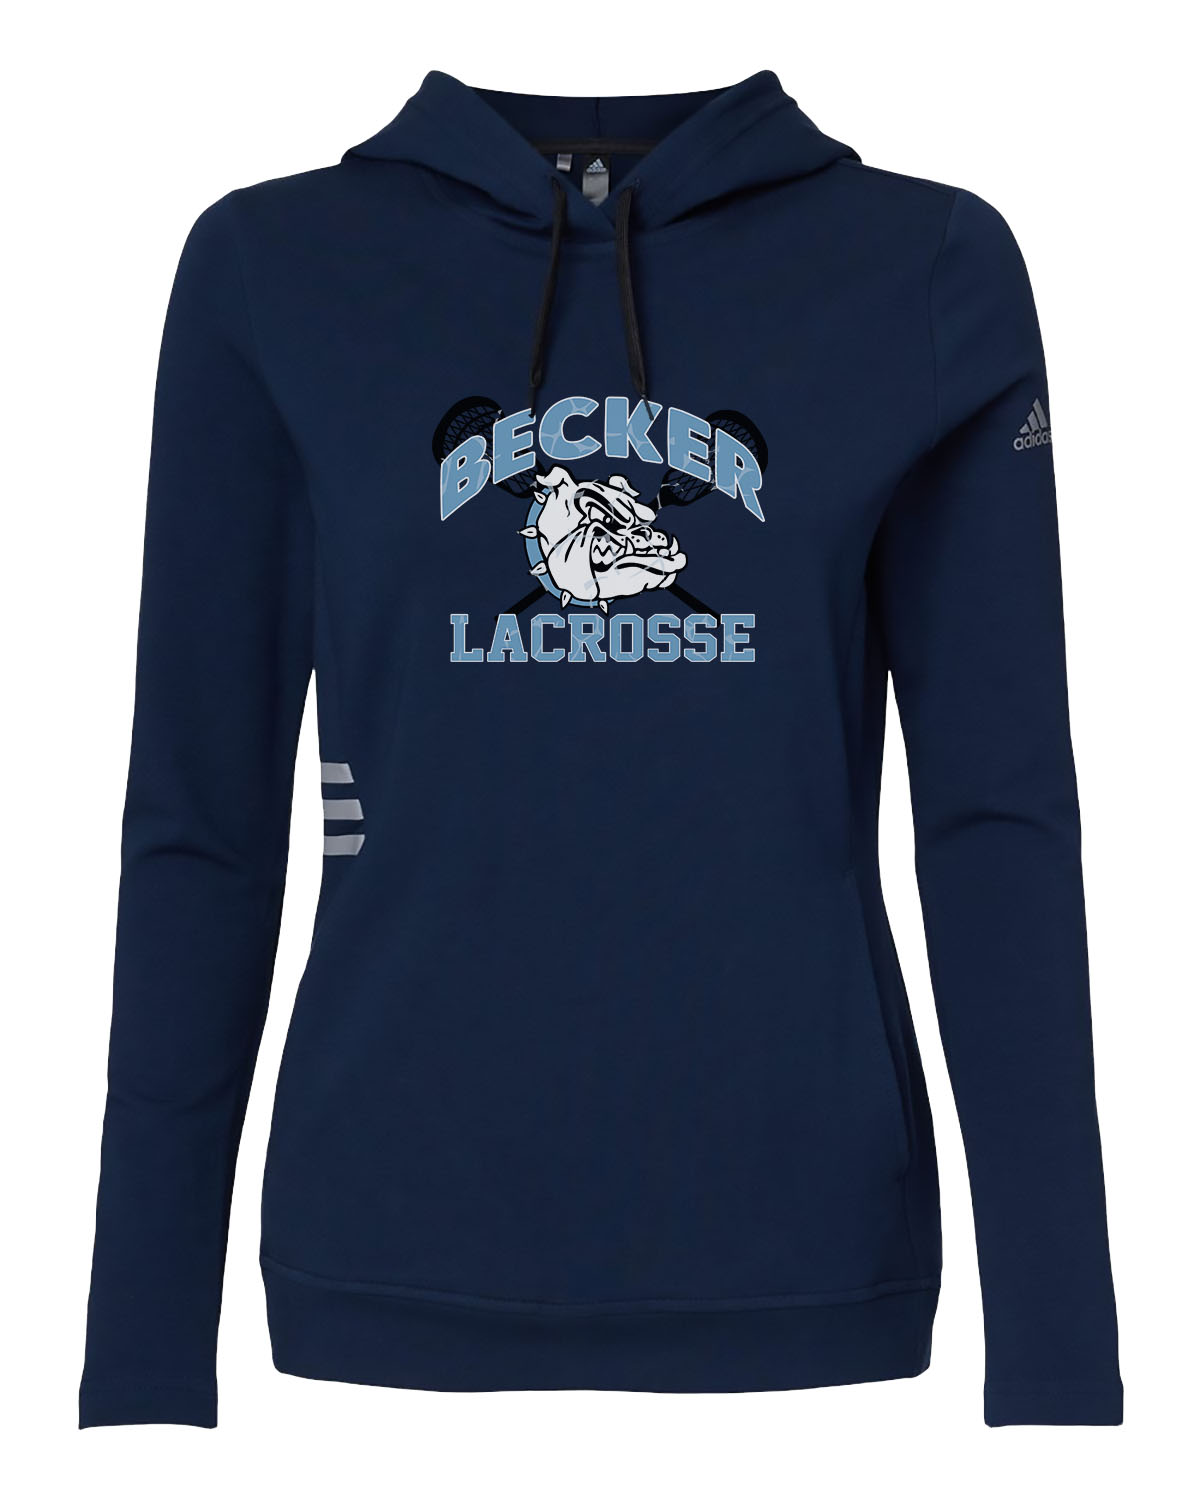 Becker Lacrosse // Women's Lightweight Hoodie - Adidas